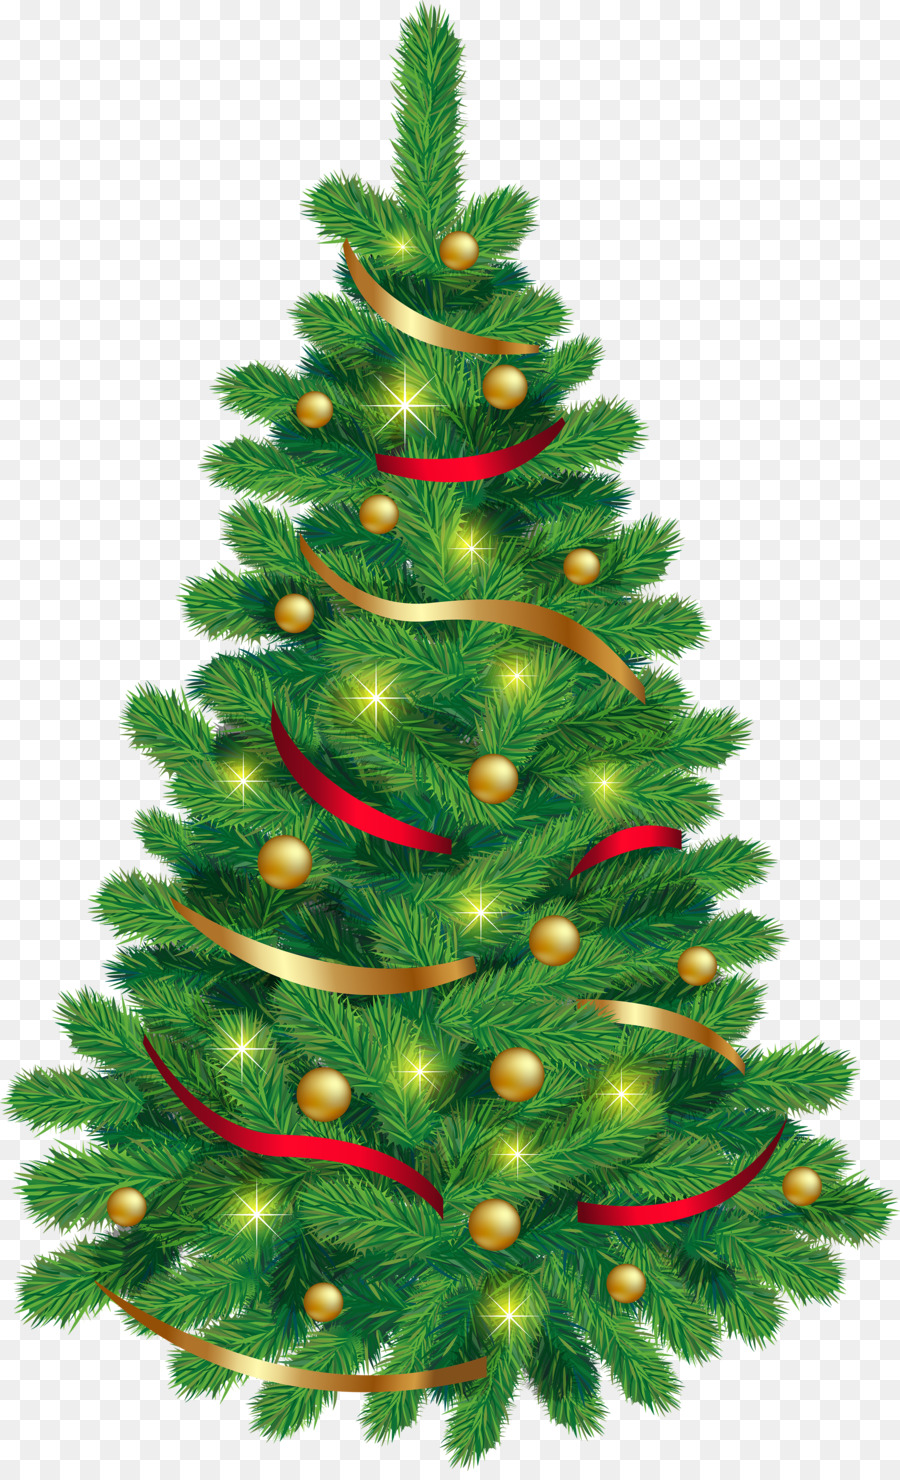 Christmas tree Clip art - christmas album png download - 2447*4000 - Free Transparent Christmas Tree png Download.